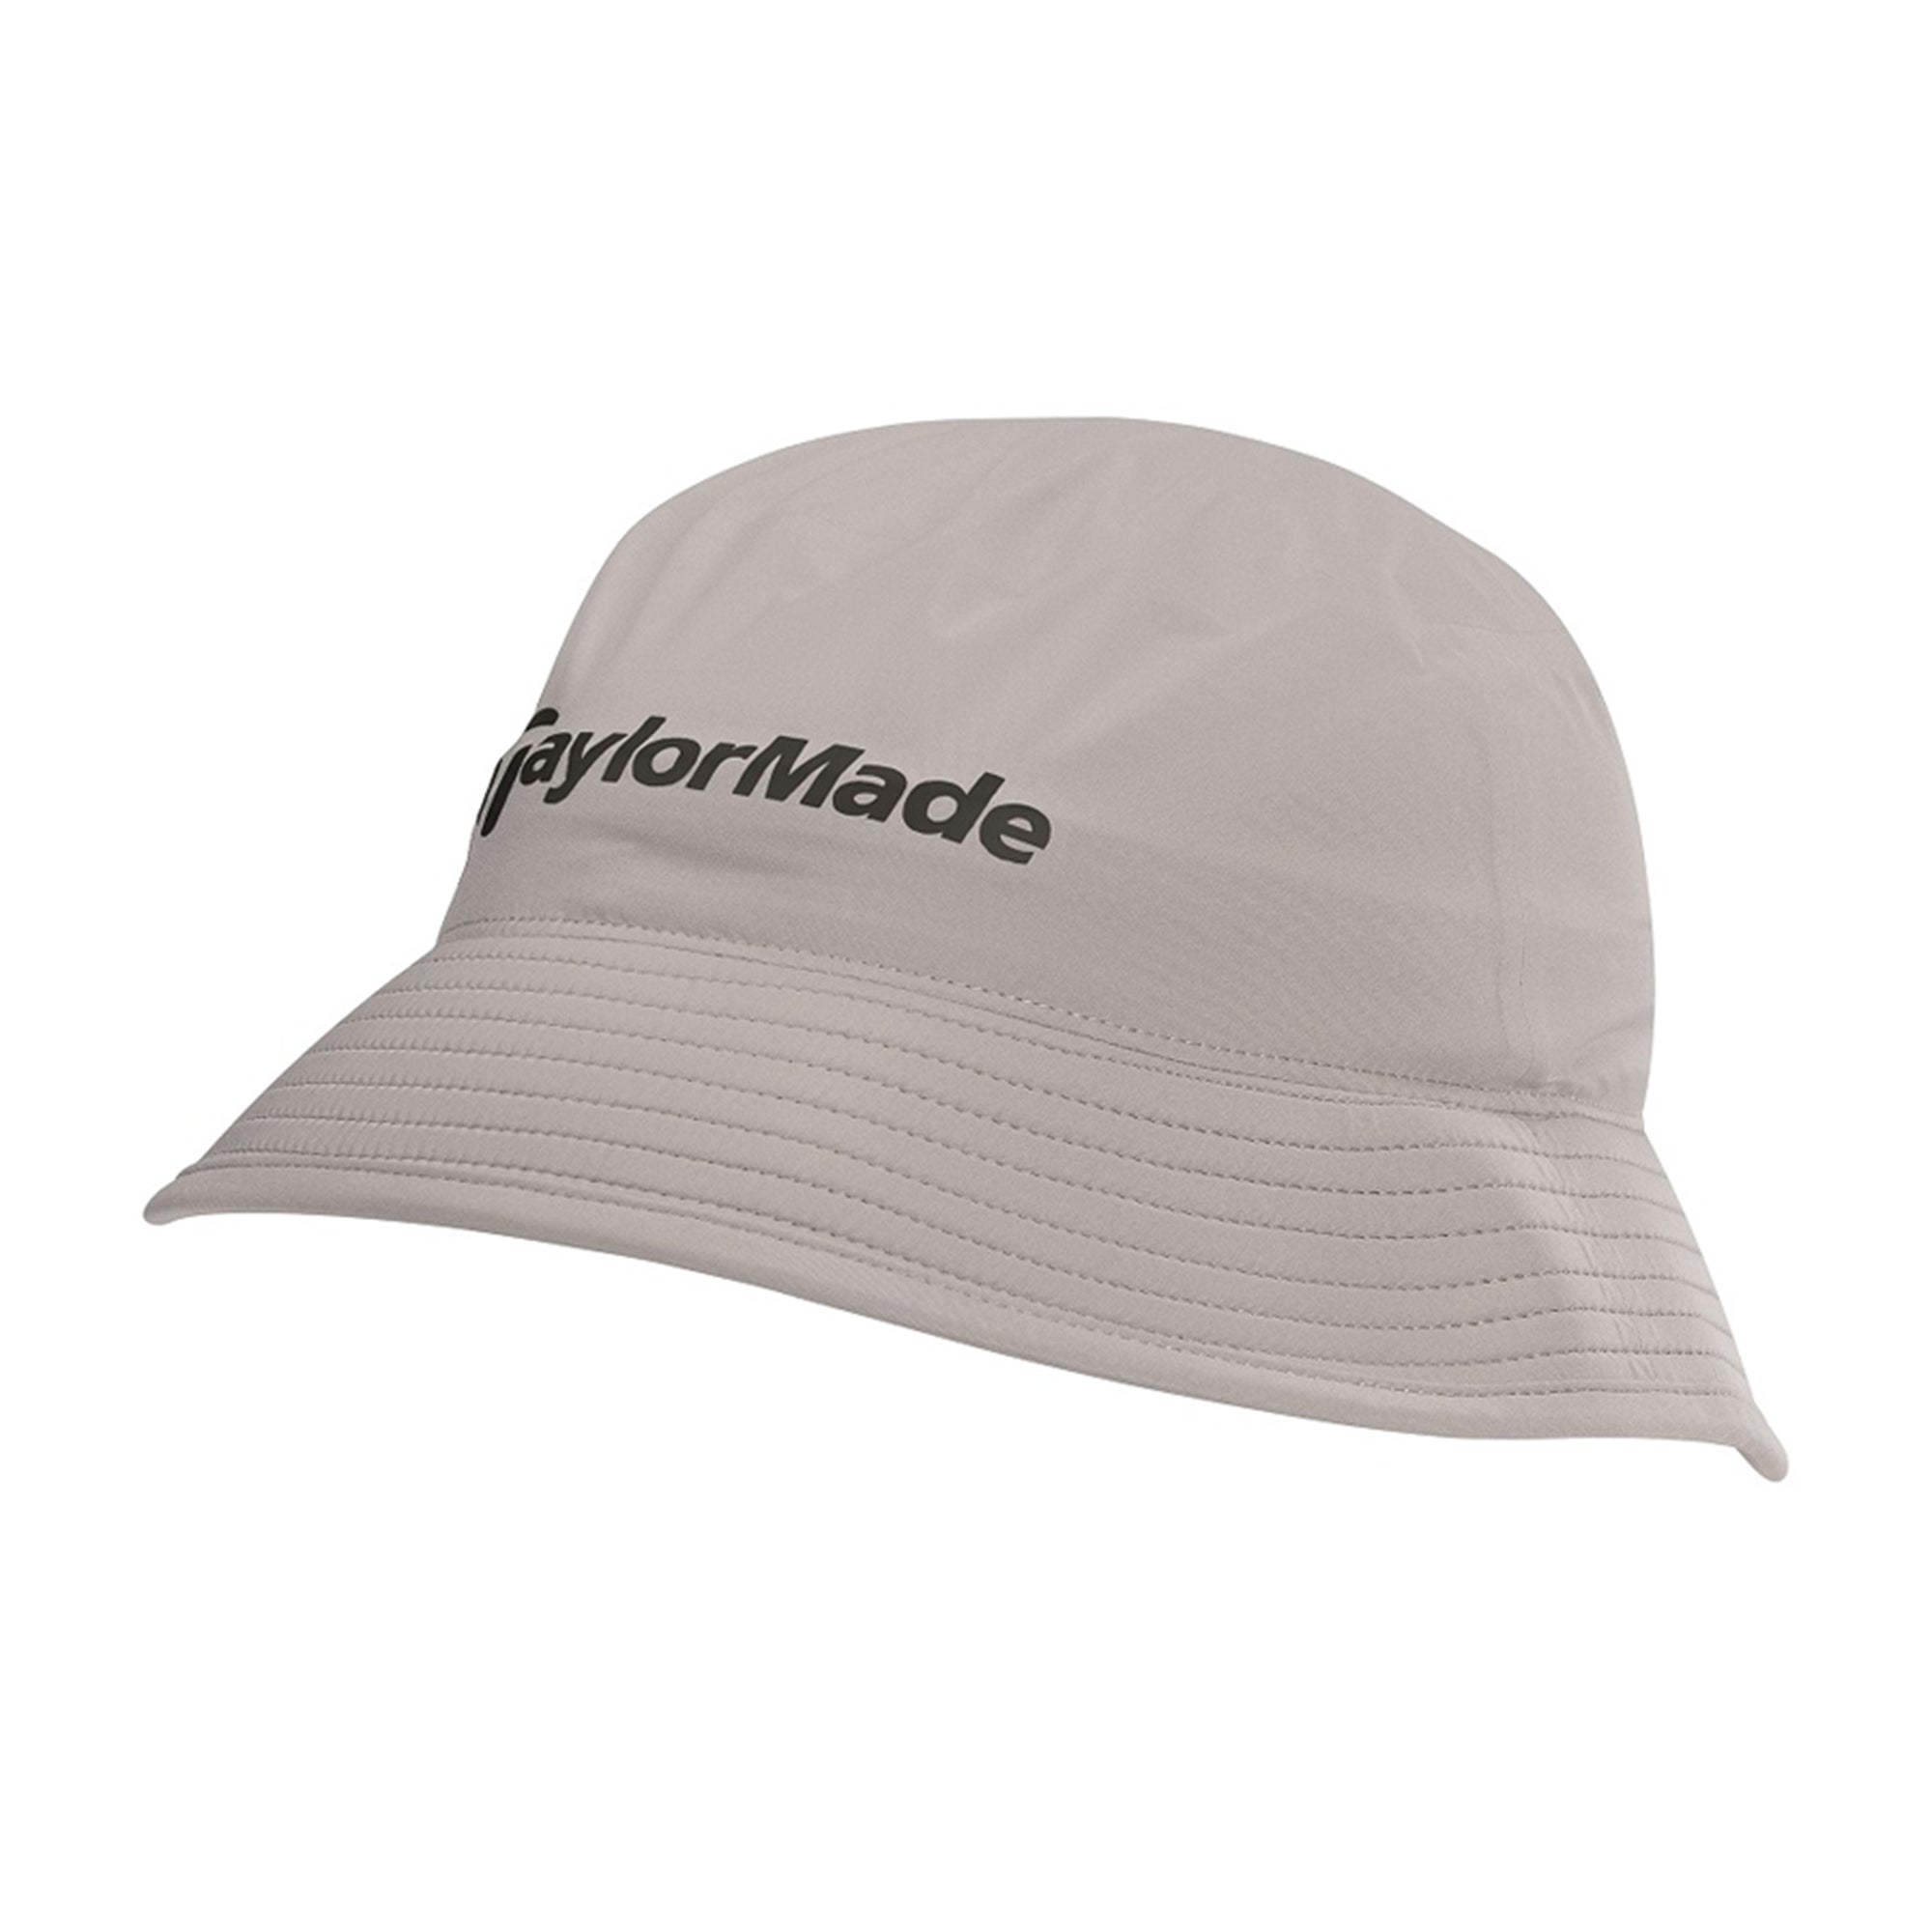 taylormade-golf-storm-bucket-hat-n77645-grey